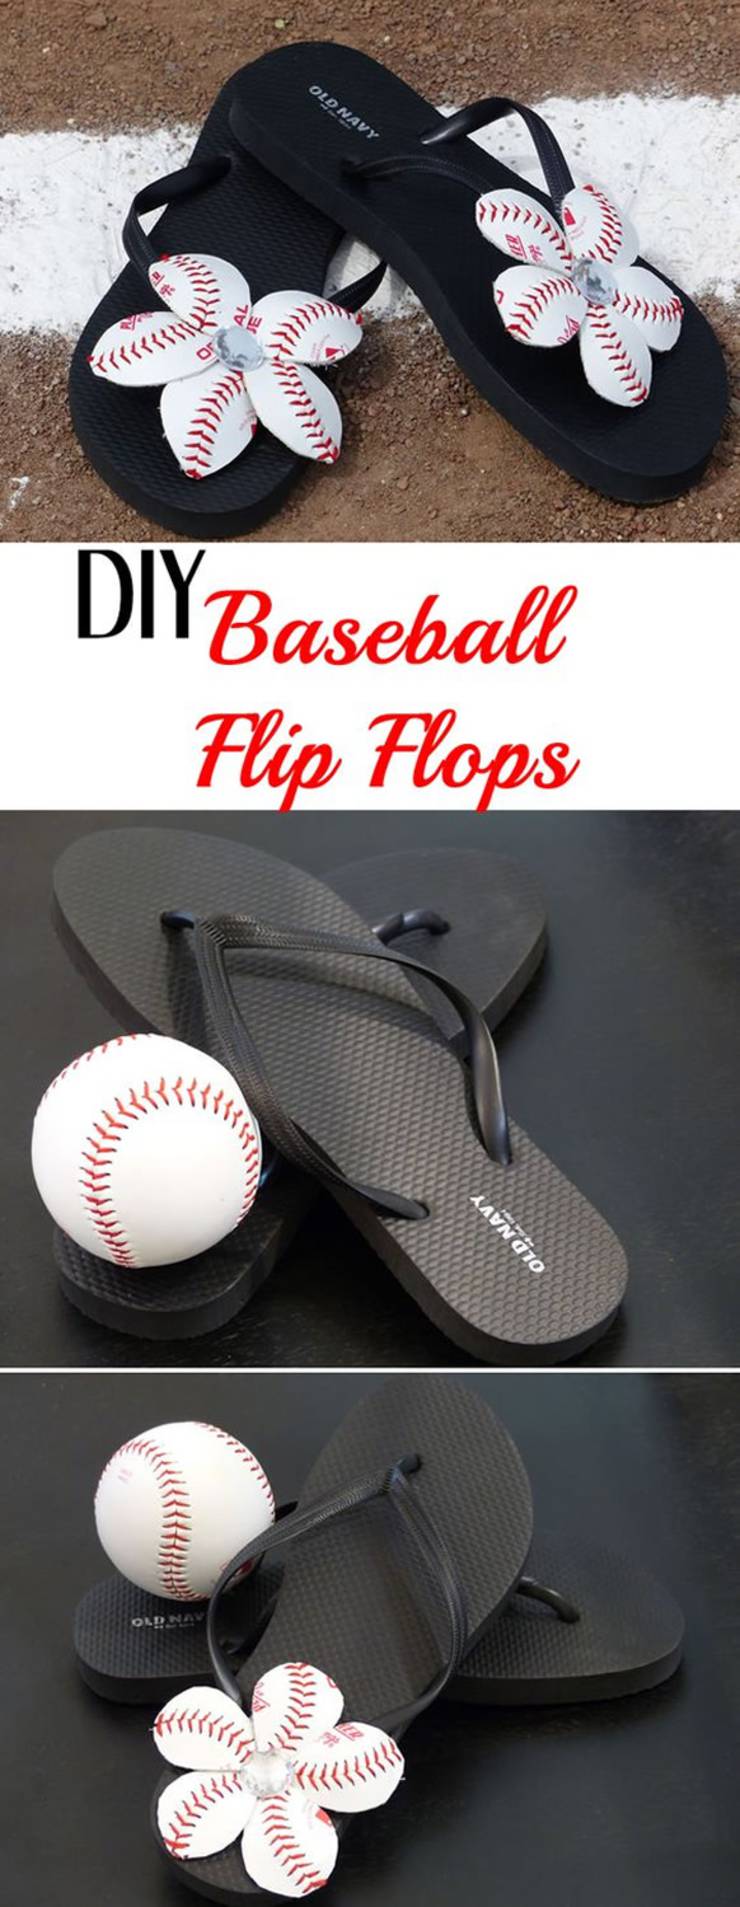 diy baseball flip flops